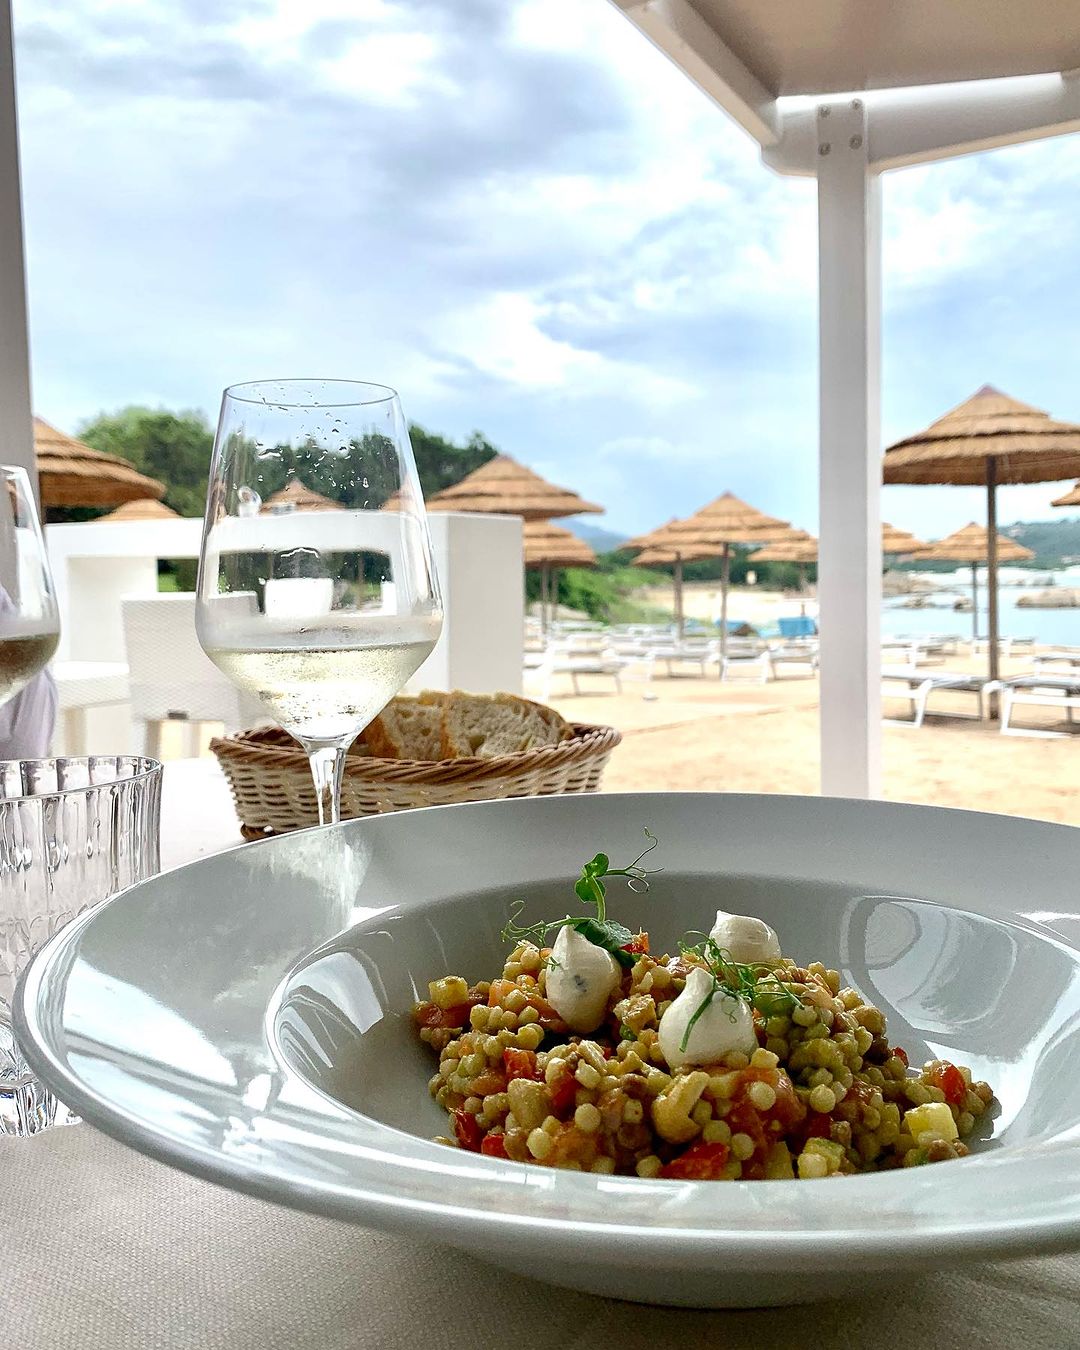 An elegant and intimate environment at Oasi Beach Club - Sardinia - Top 10 Beach Bars